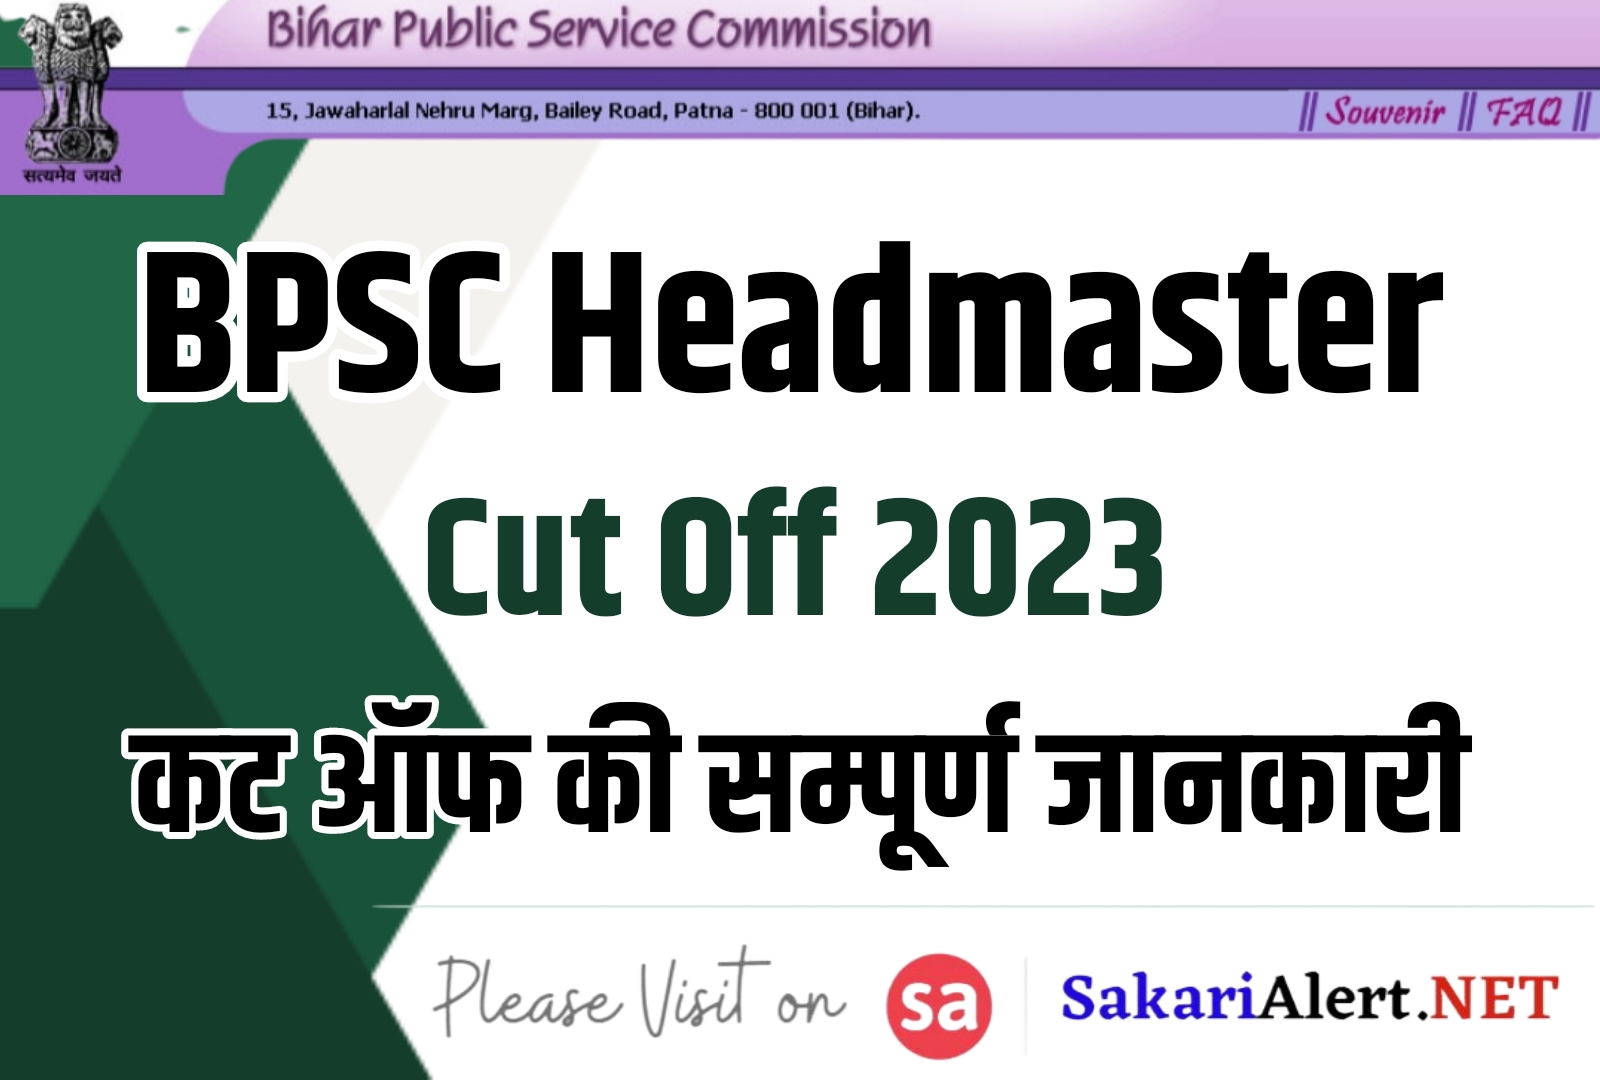 BPSC Headmaster Cut off 2023